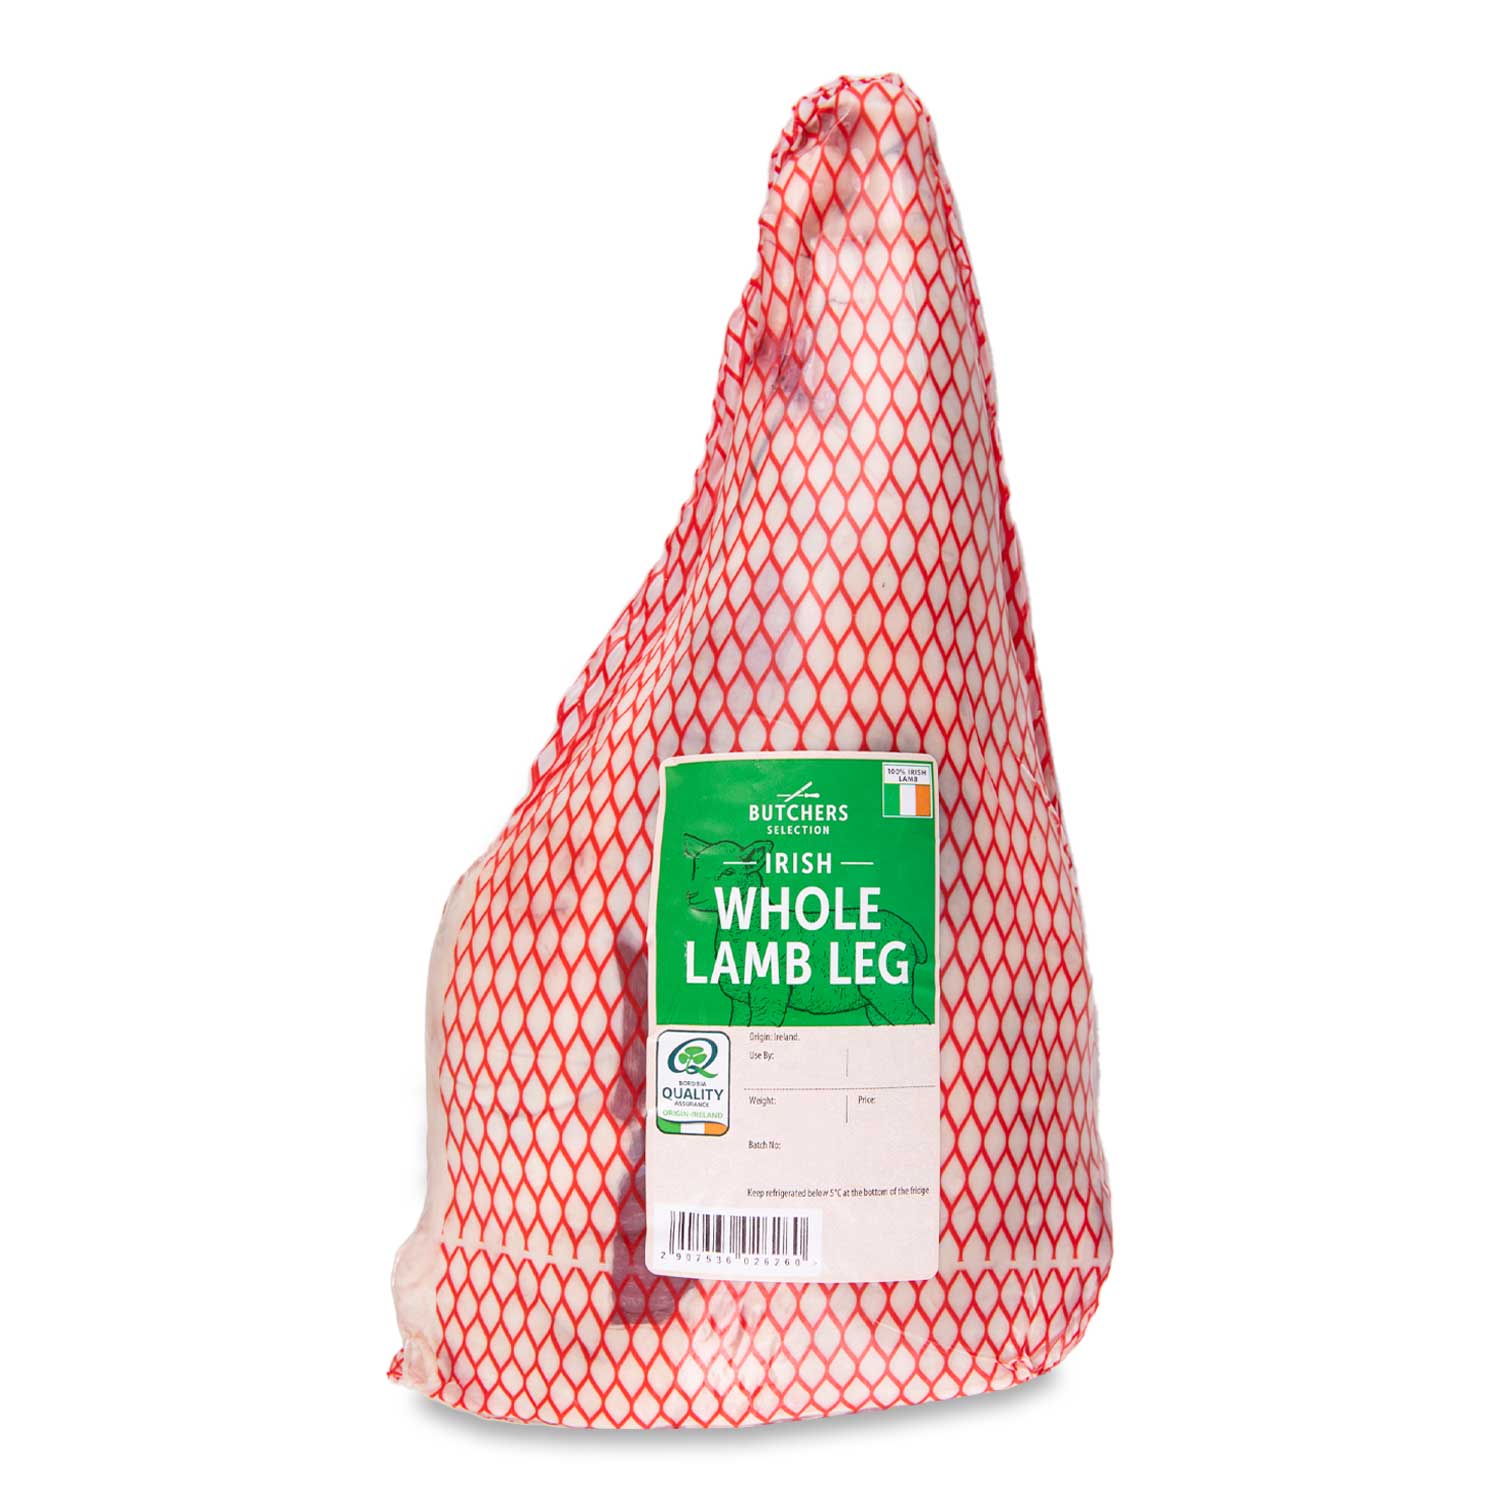 100% Irish Whole Lamb Leg Typically 2.3kg Butcher's Selection